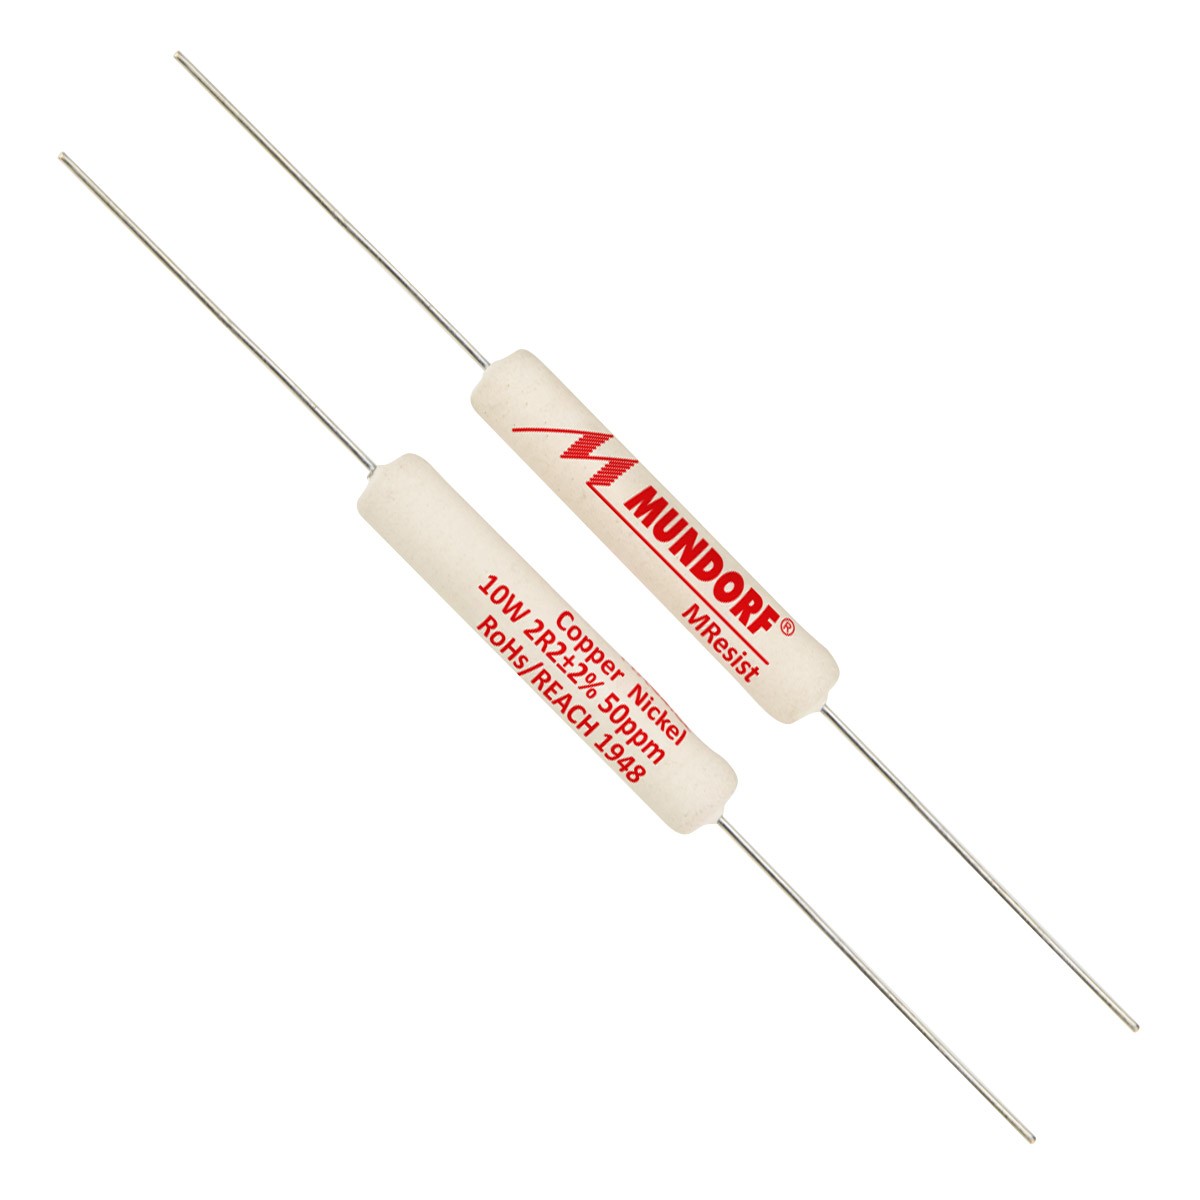 MUNDORF MRESIST CLASSIC Resistor 10W 12 Ohm